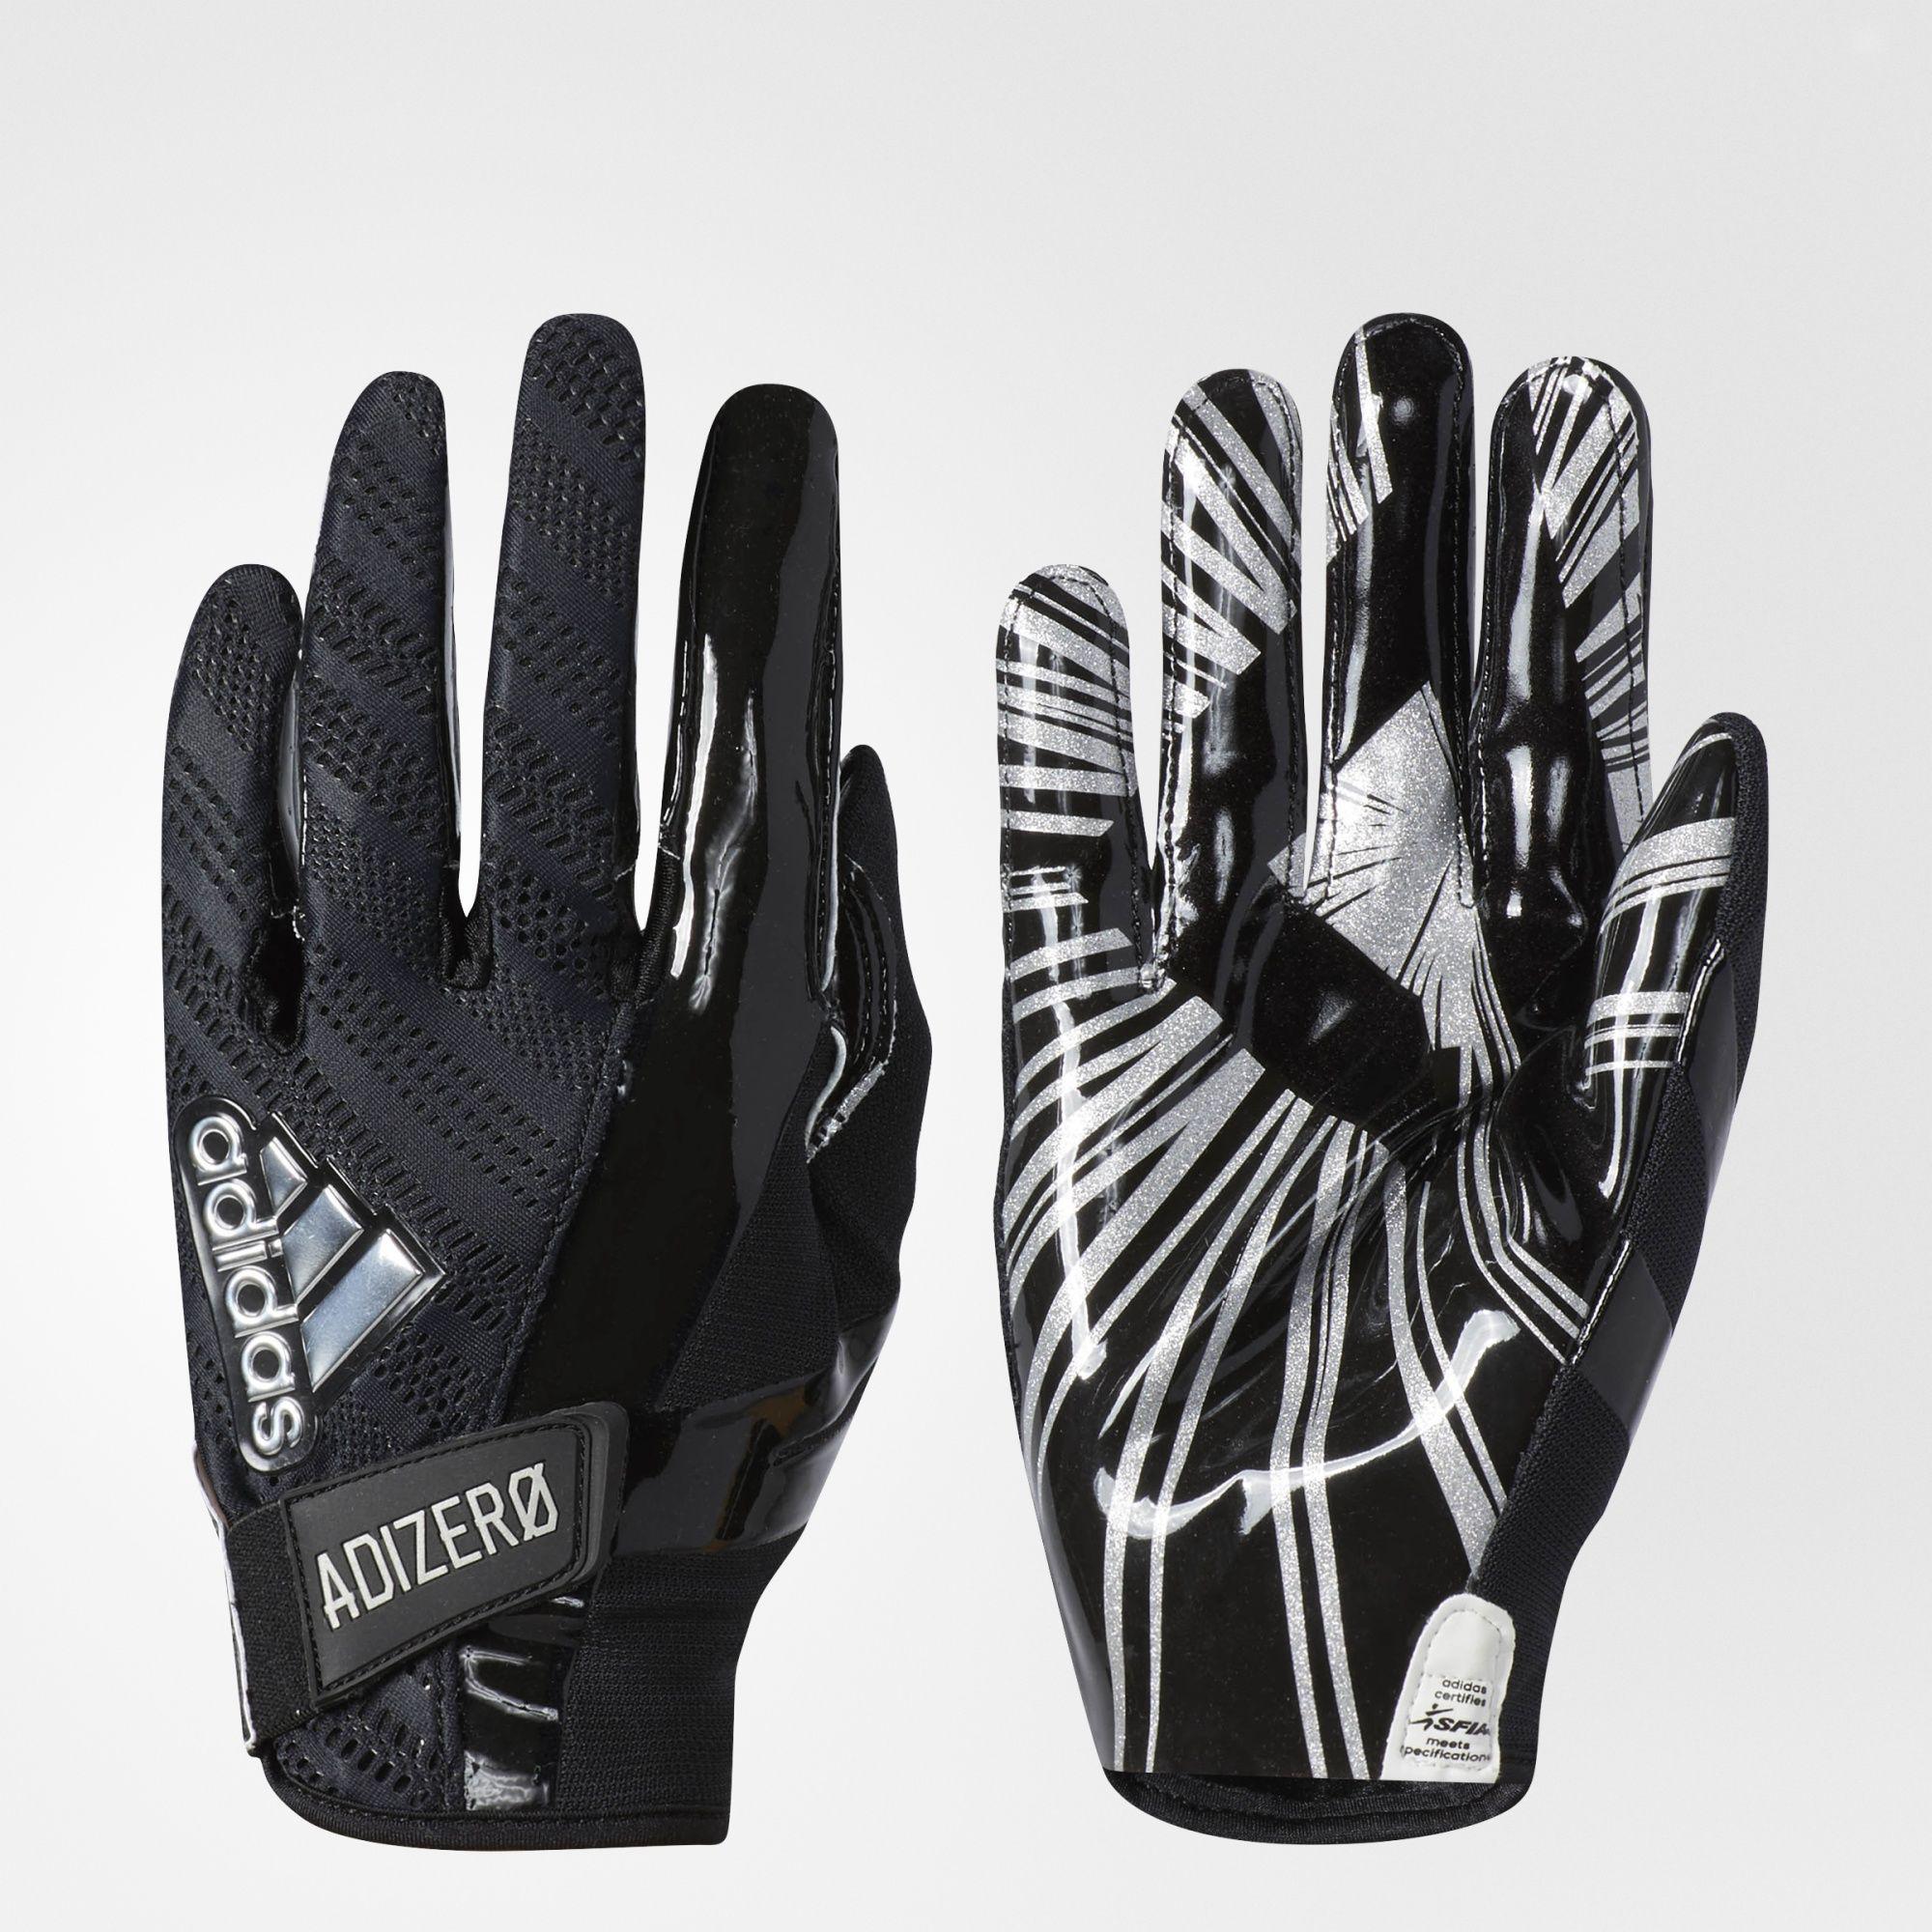 Adidas Adizero 5 Star 6.0 Gloves Flash Sales, SAVE 47% - mpgc.net